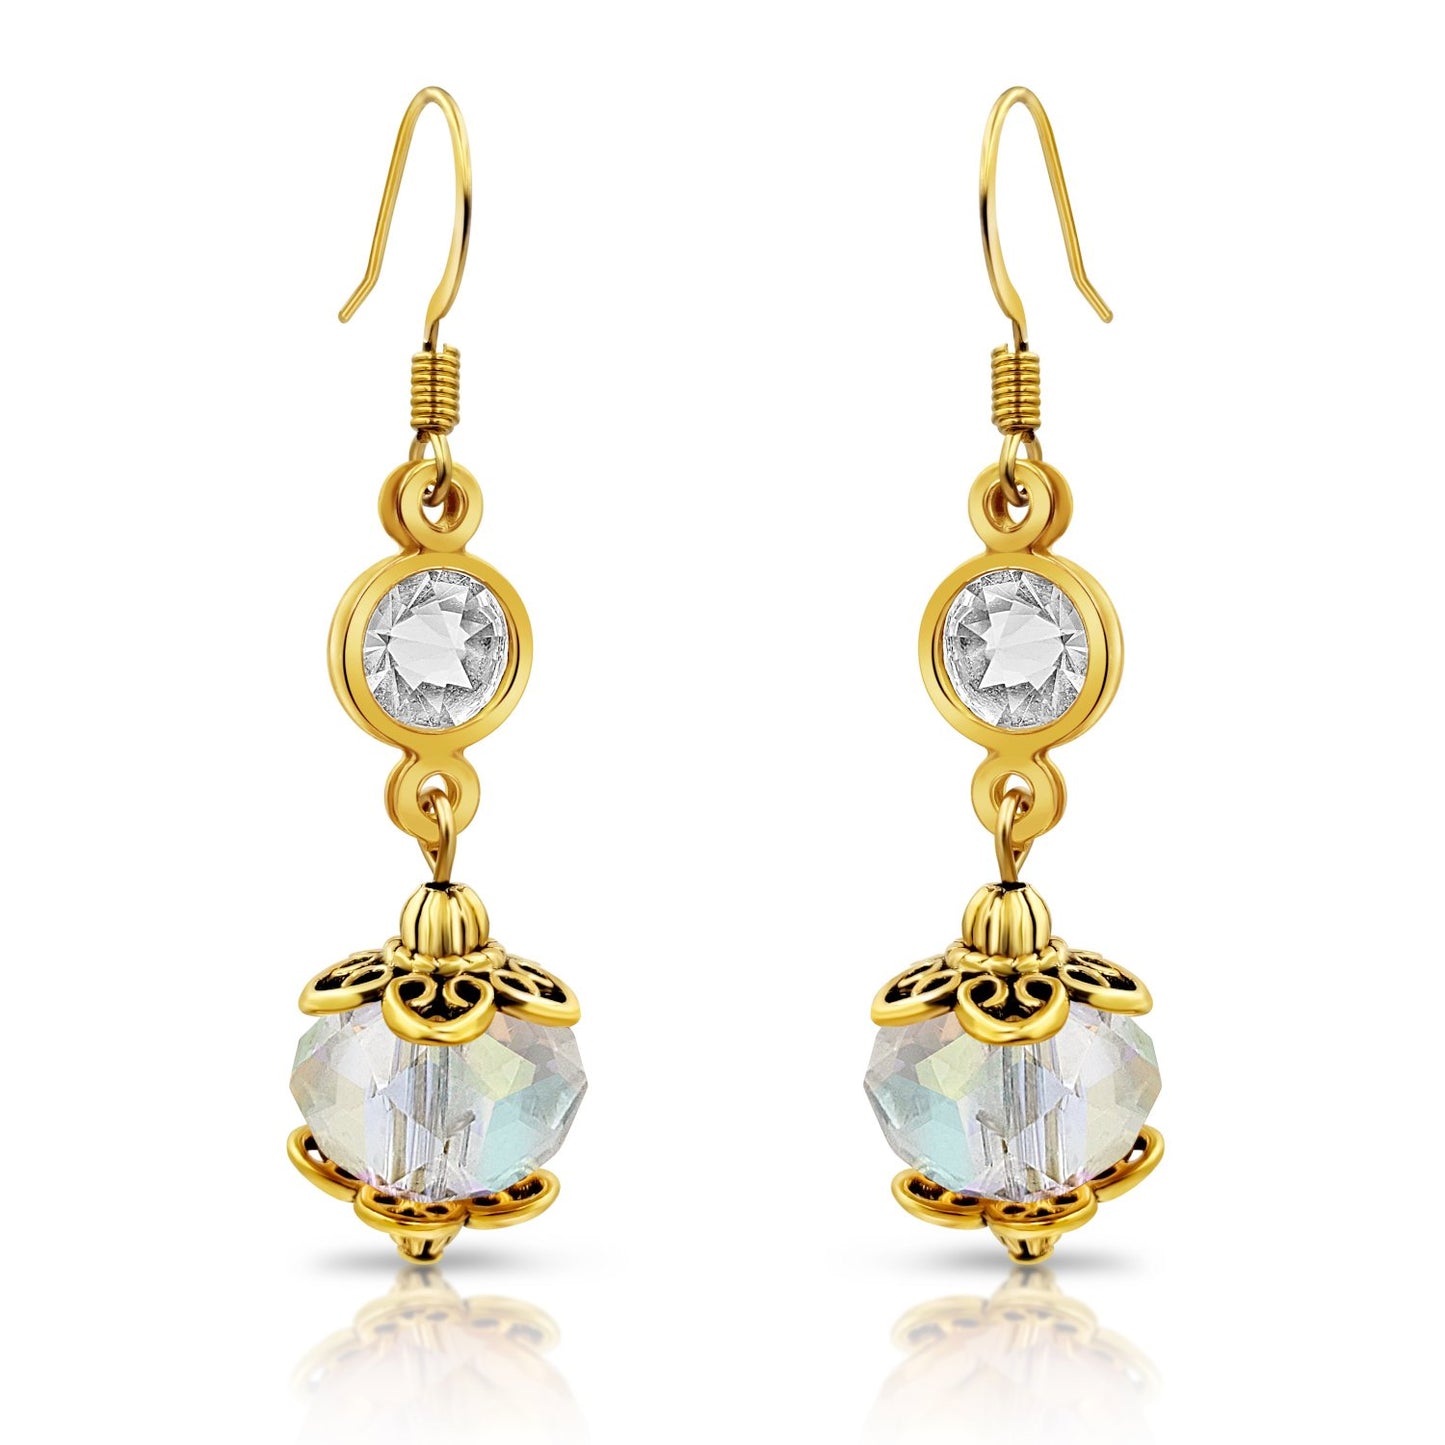 BESHEEK Goldtone and Clear AB Crystal Dangle Earrings | Handmade Hypoallergenic Boho Beach Gala Wedding Style Fashion Earrings